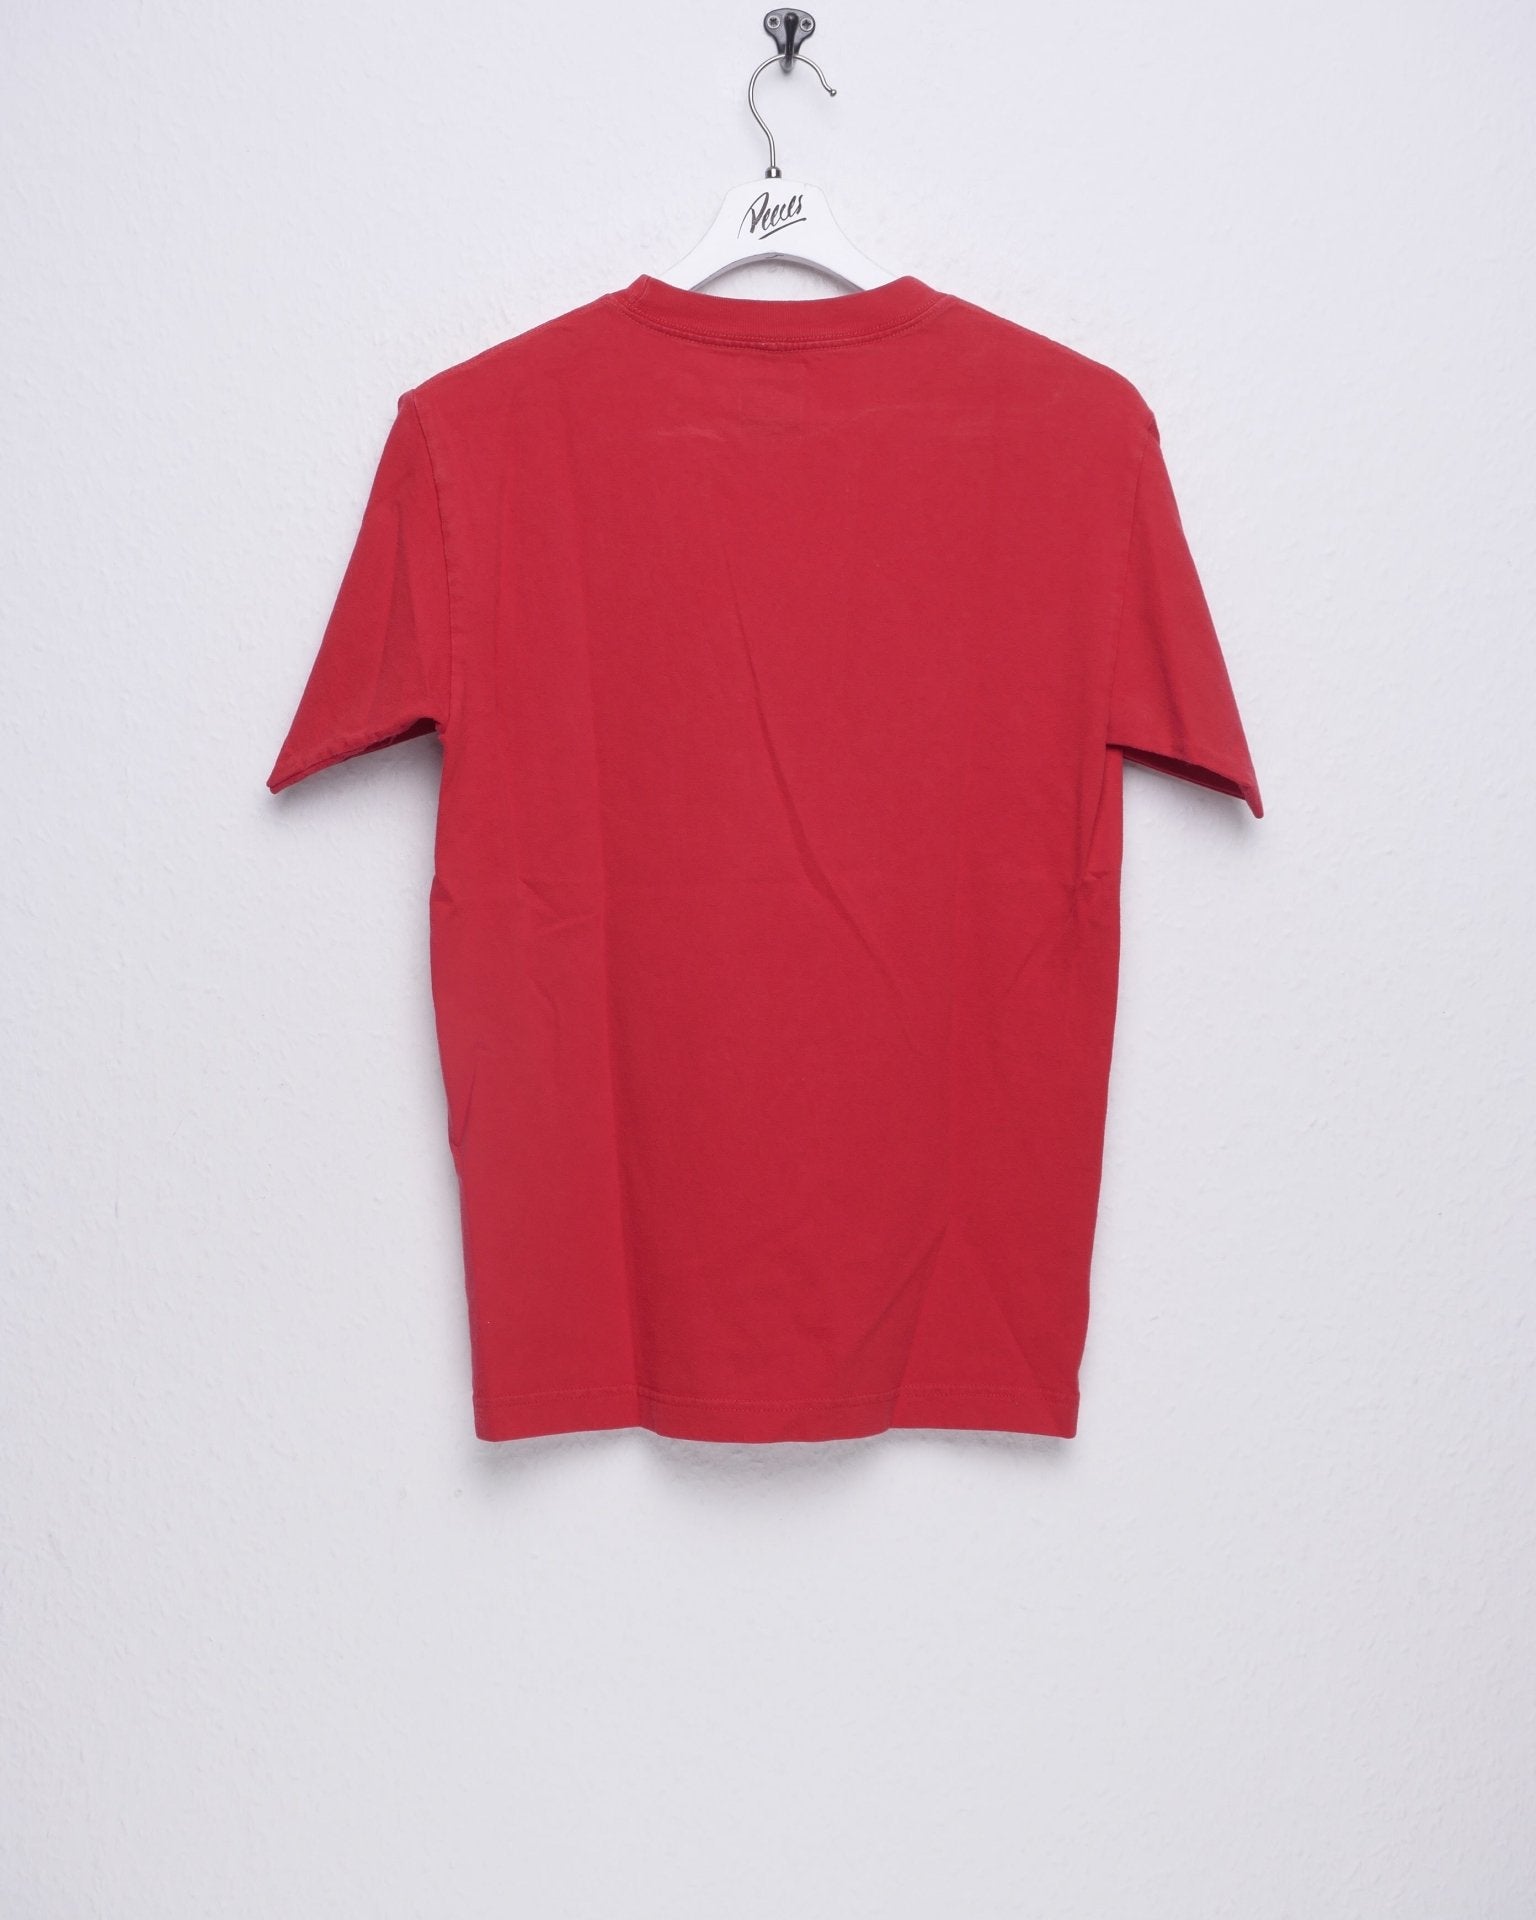 Reebok printed Spellout Washingtin Capitals red Shirt - Peeces